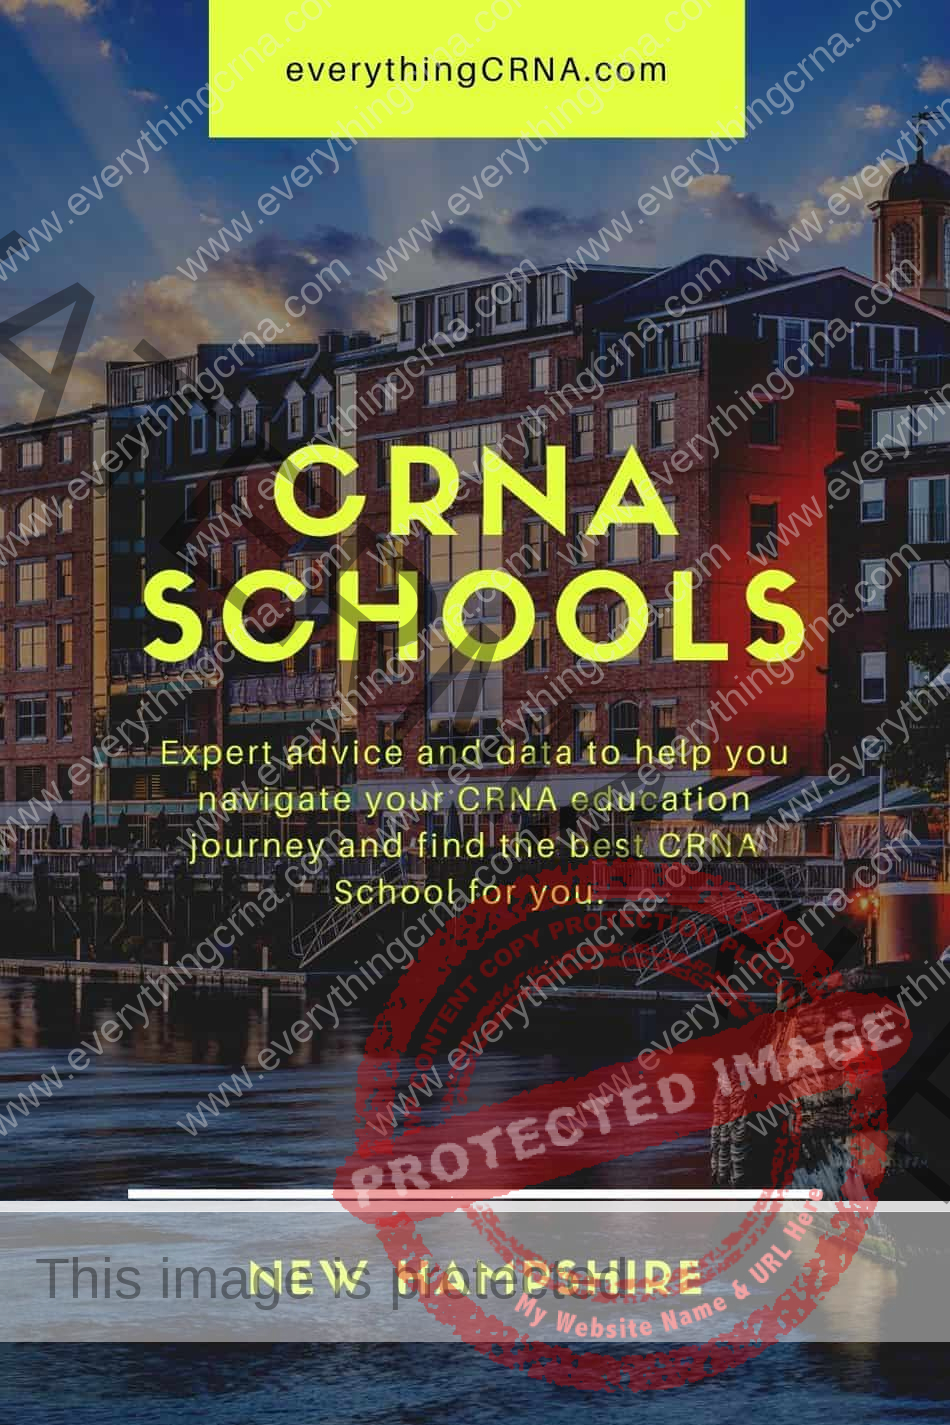 CRNA Schools in New Hampshire